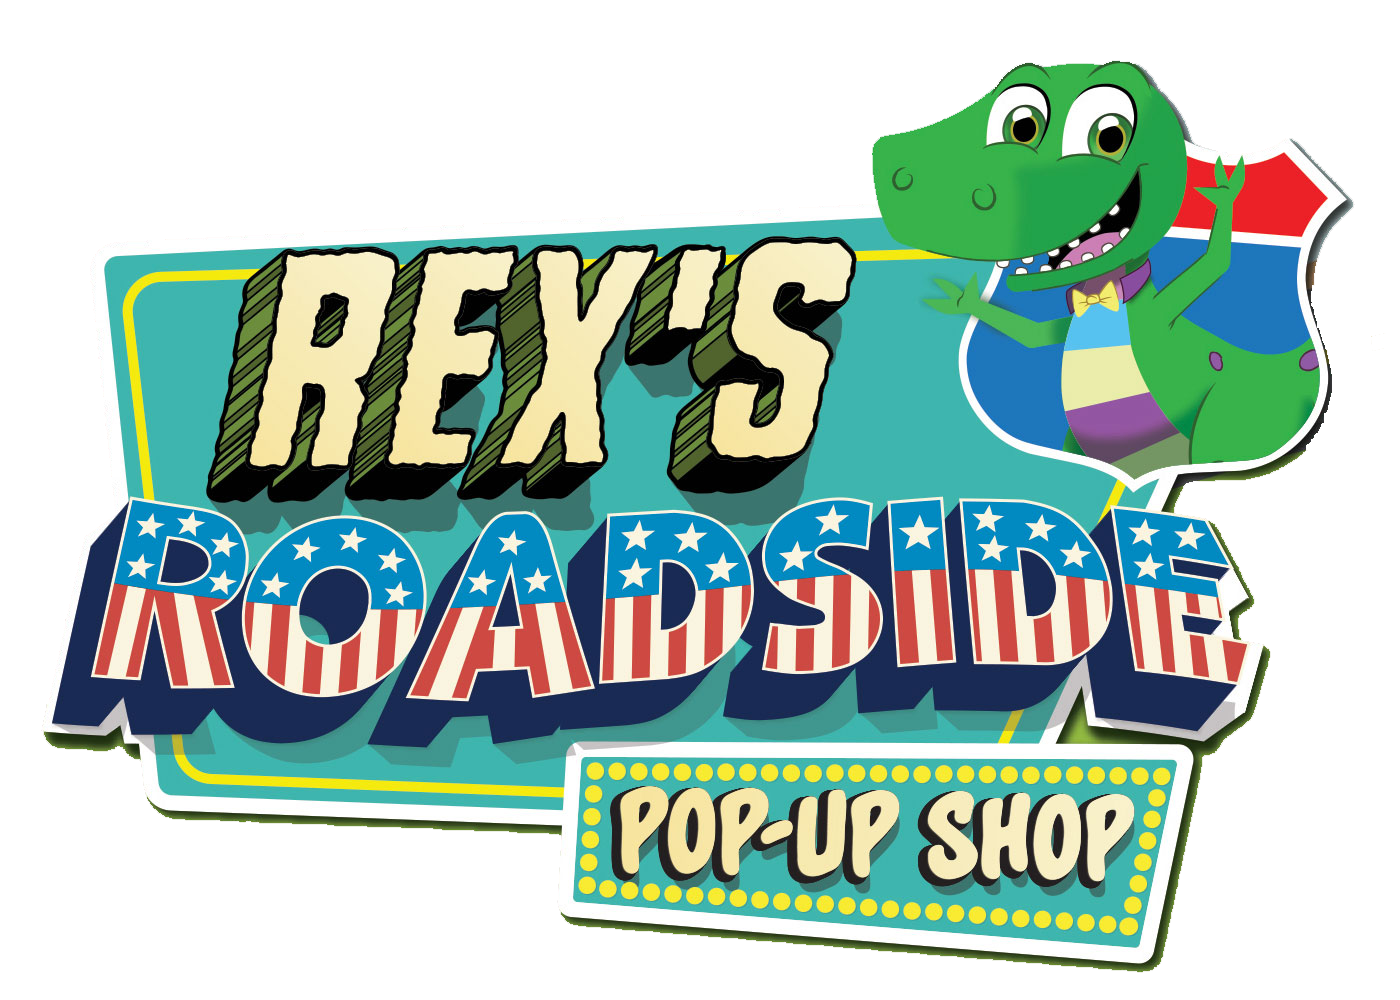 Rex's Roadside Pop-Up Shop logo